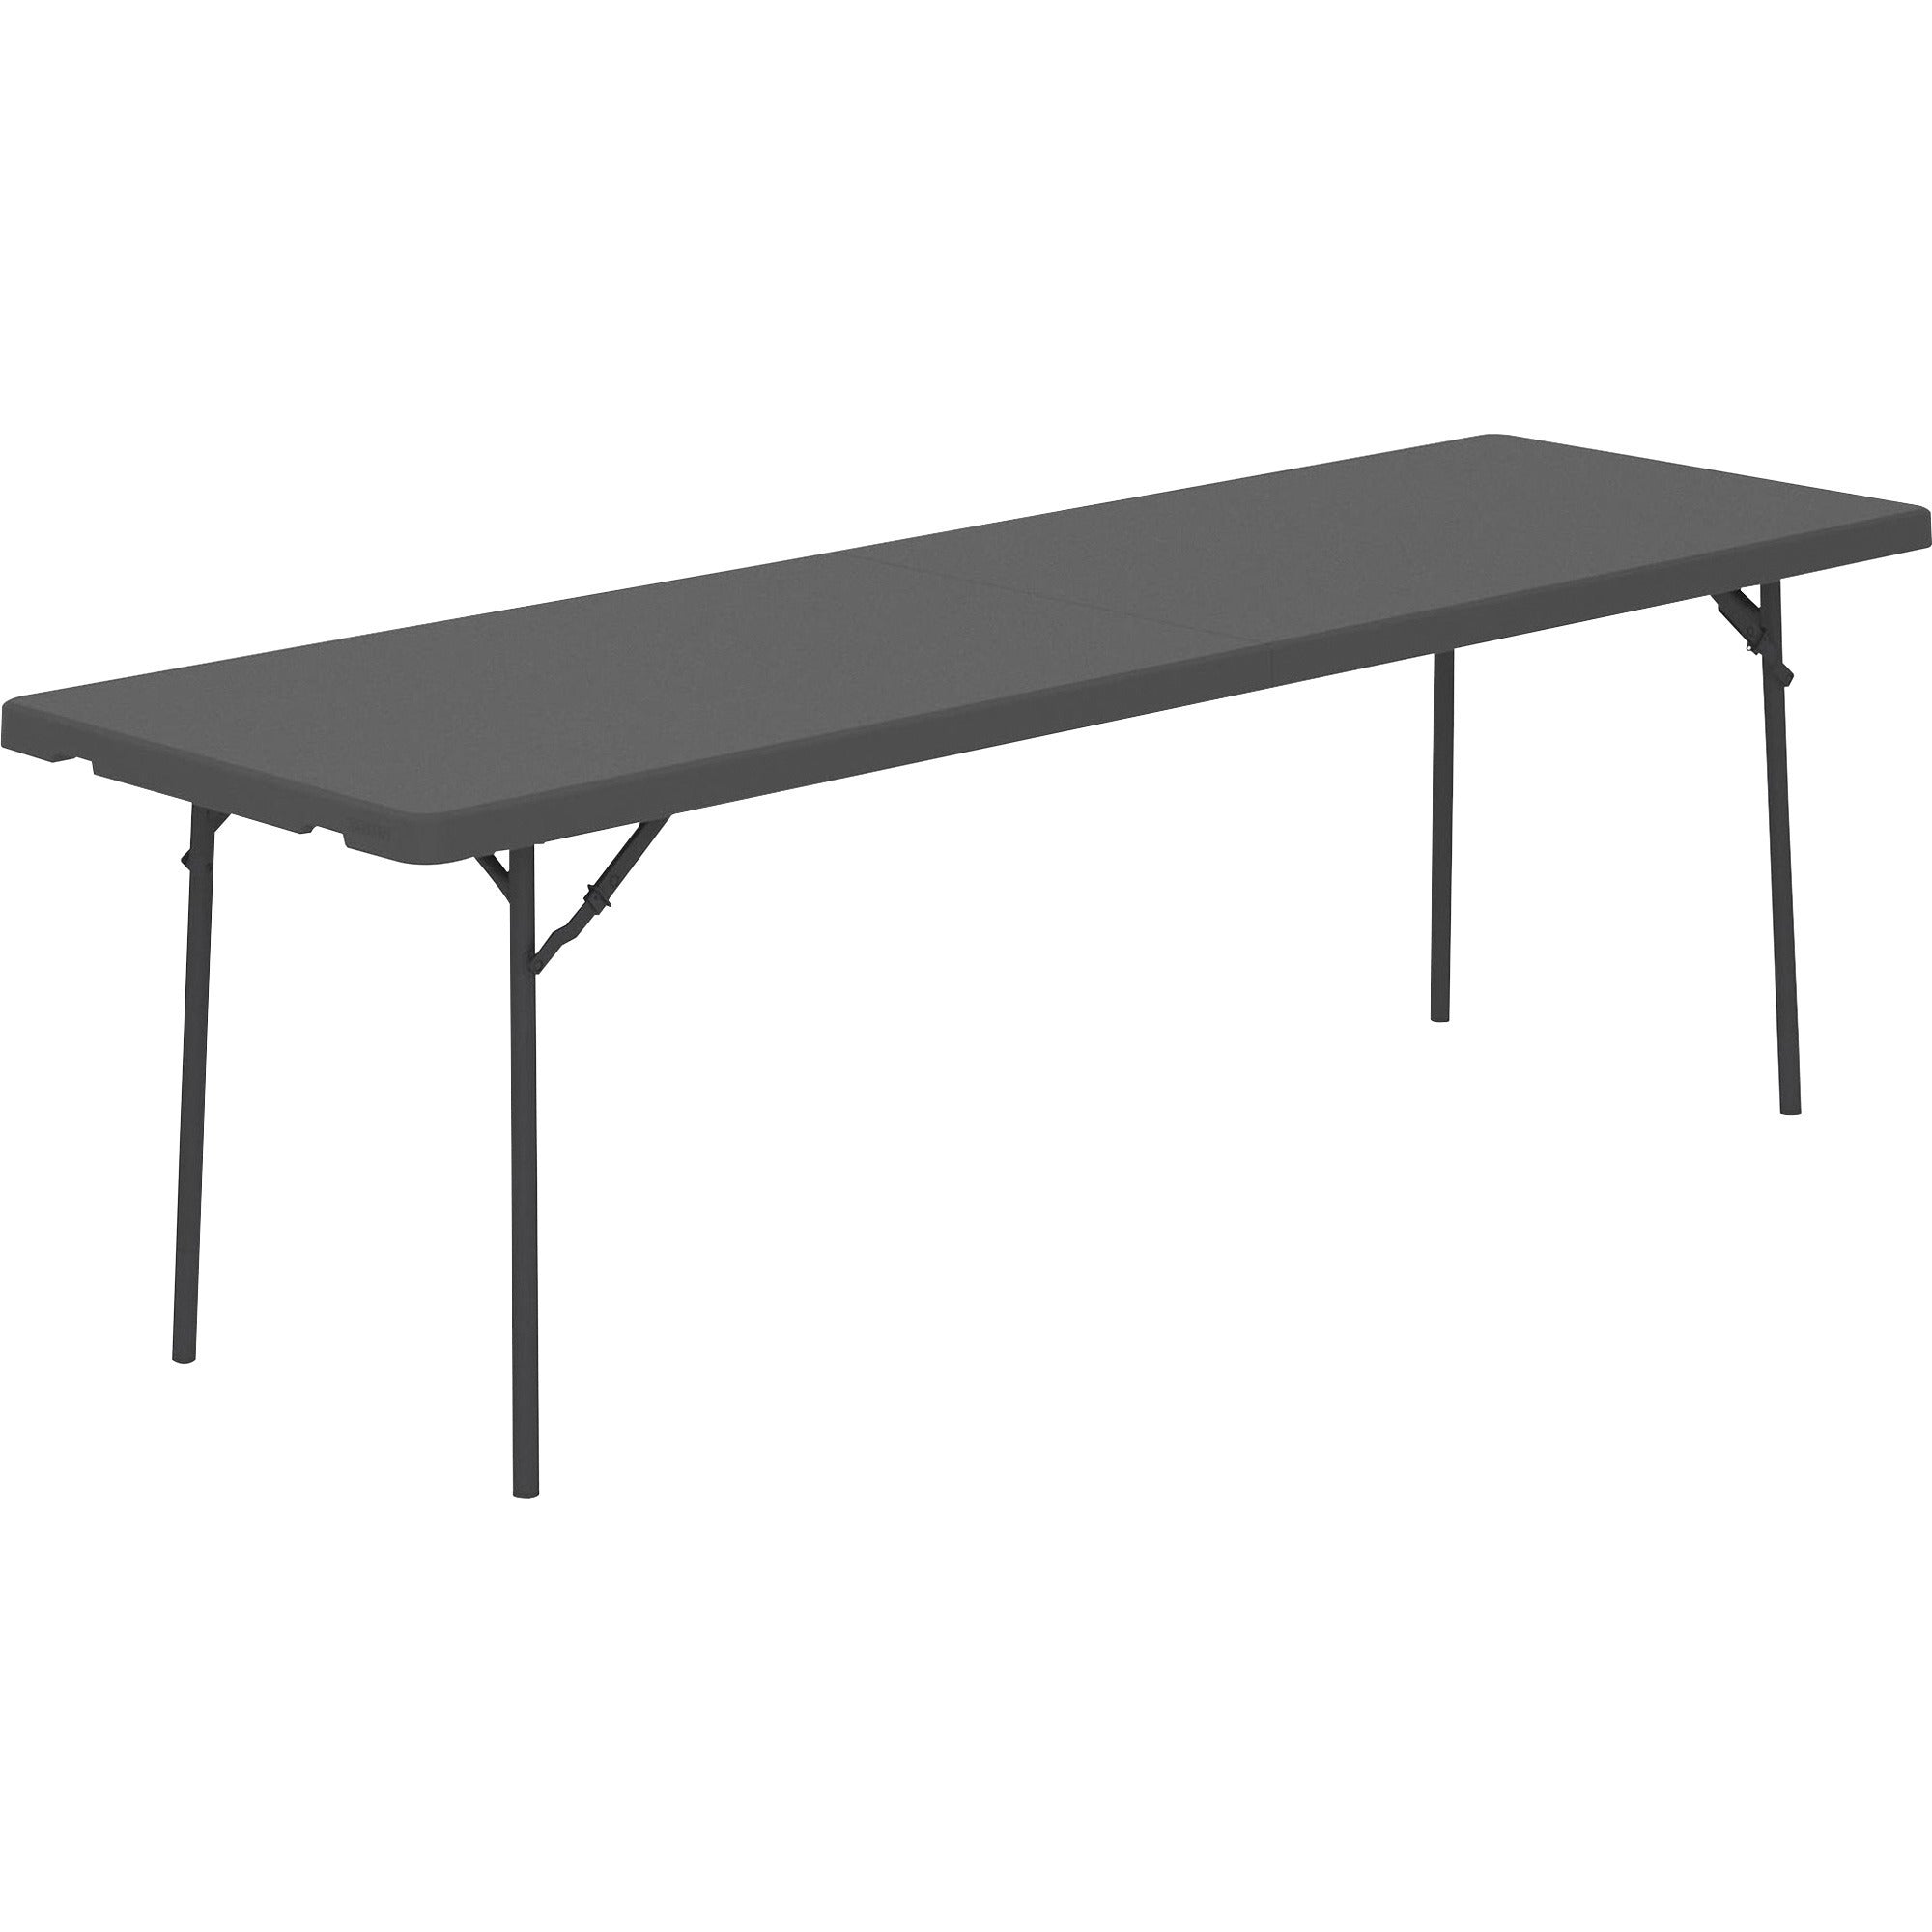 Dorel ZOWN 96" Commercial Blow Mold Folding Table - 4 Legs - 1000 lb Capacity x 96" Table Top Width x 30" Table Top Depth - 29.30" Height - Gray - High-density Polyethylene (HDPE), Resin - 1 Each - 1